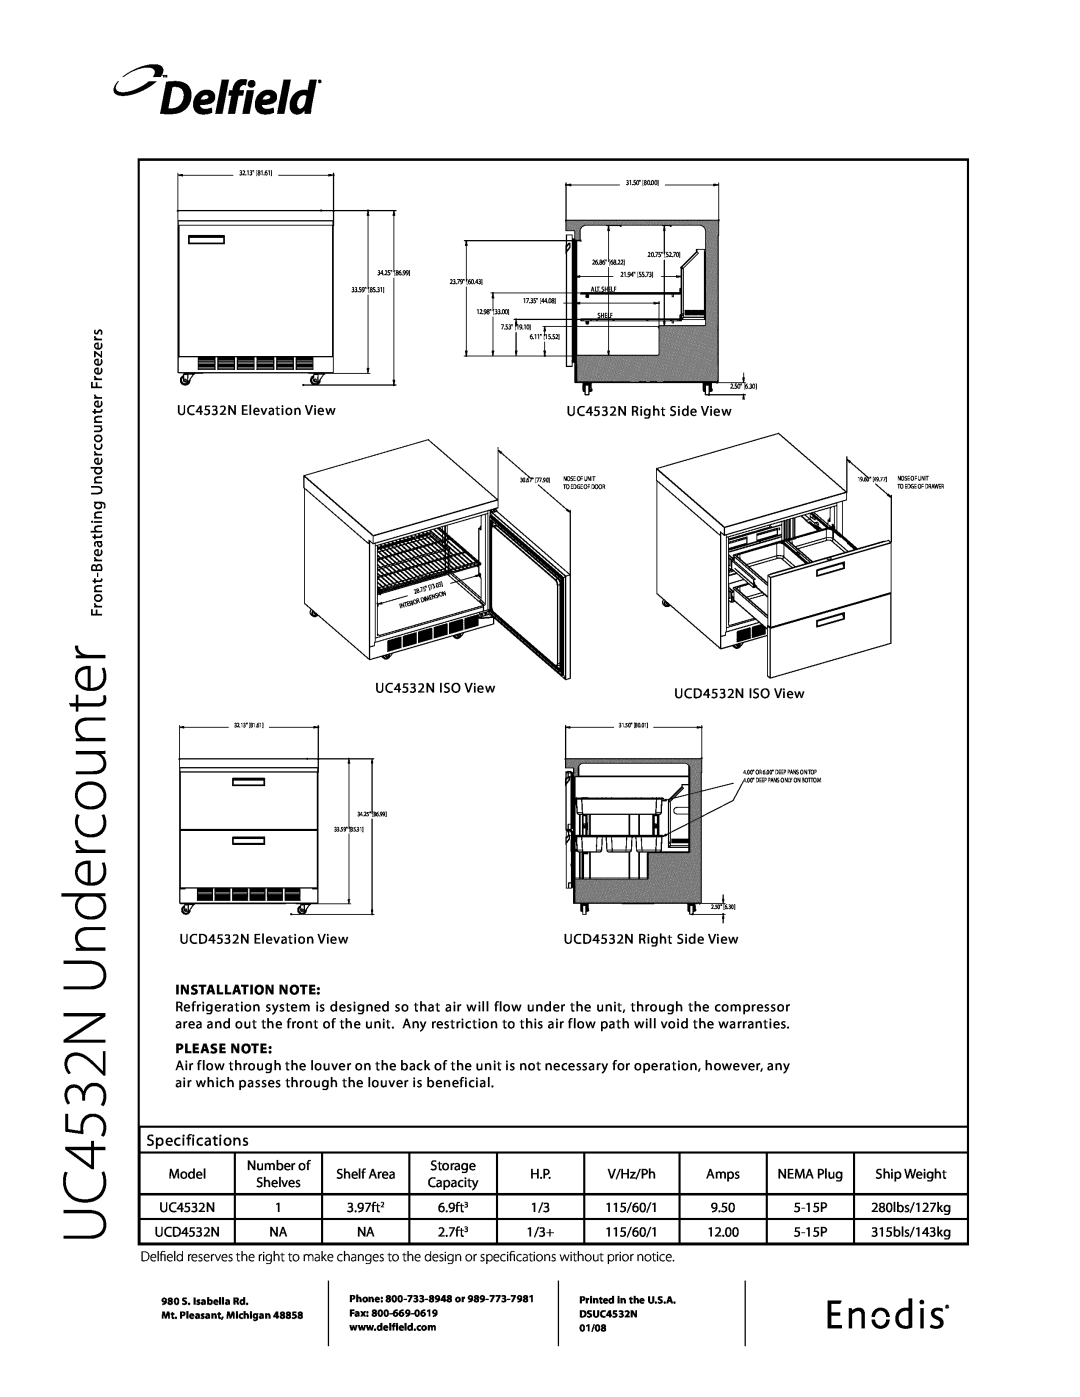 Delfield UC4532N Front-BreathingUndercounter Freezers, Specifications, Delfield, Installation Note, Please Note 